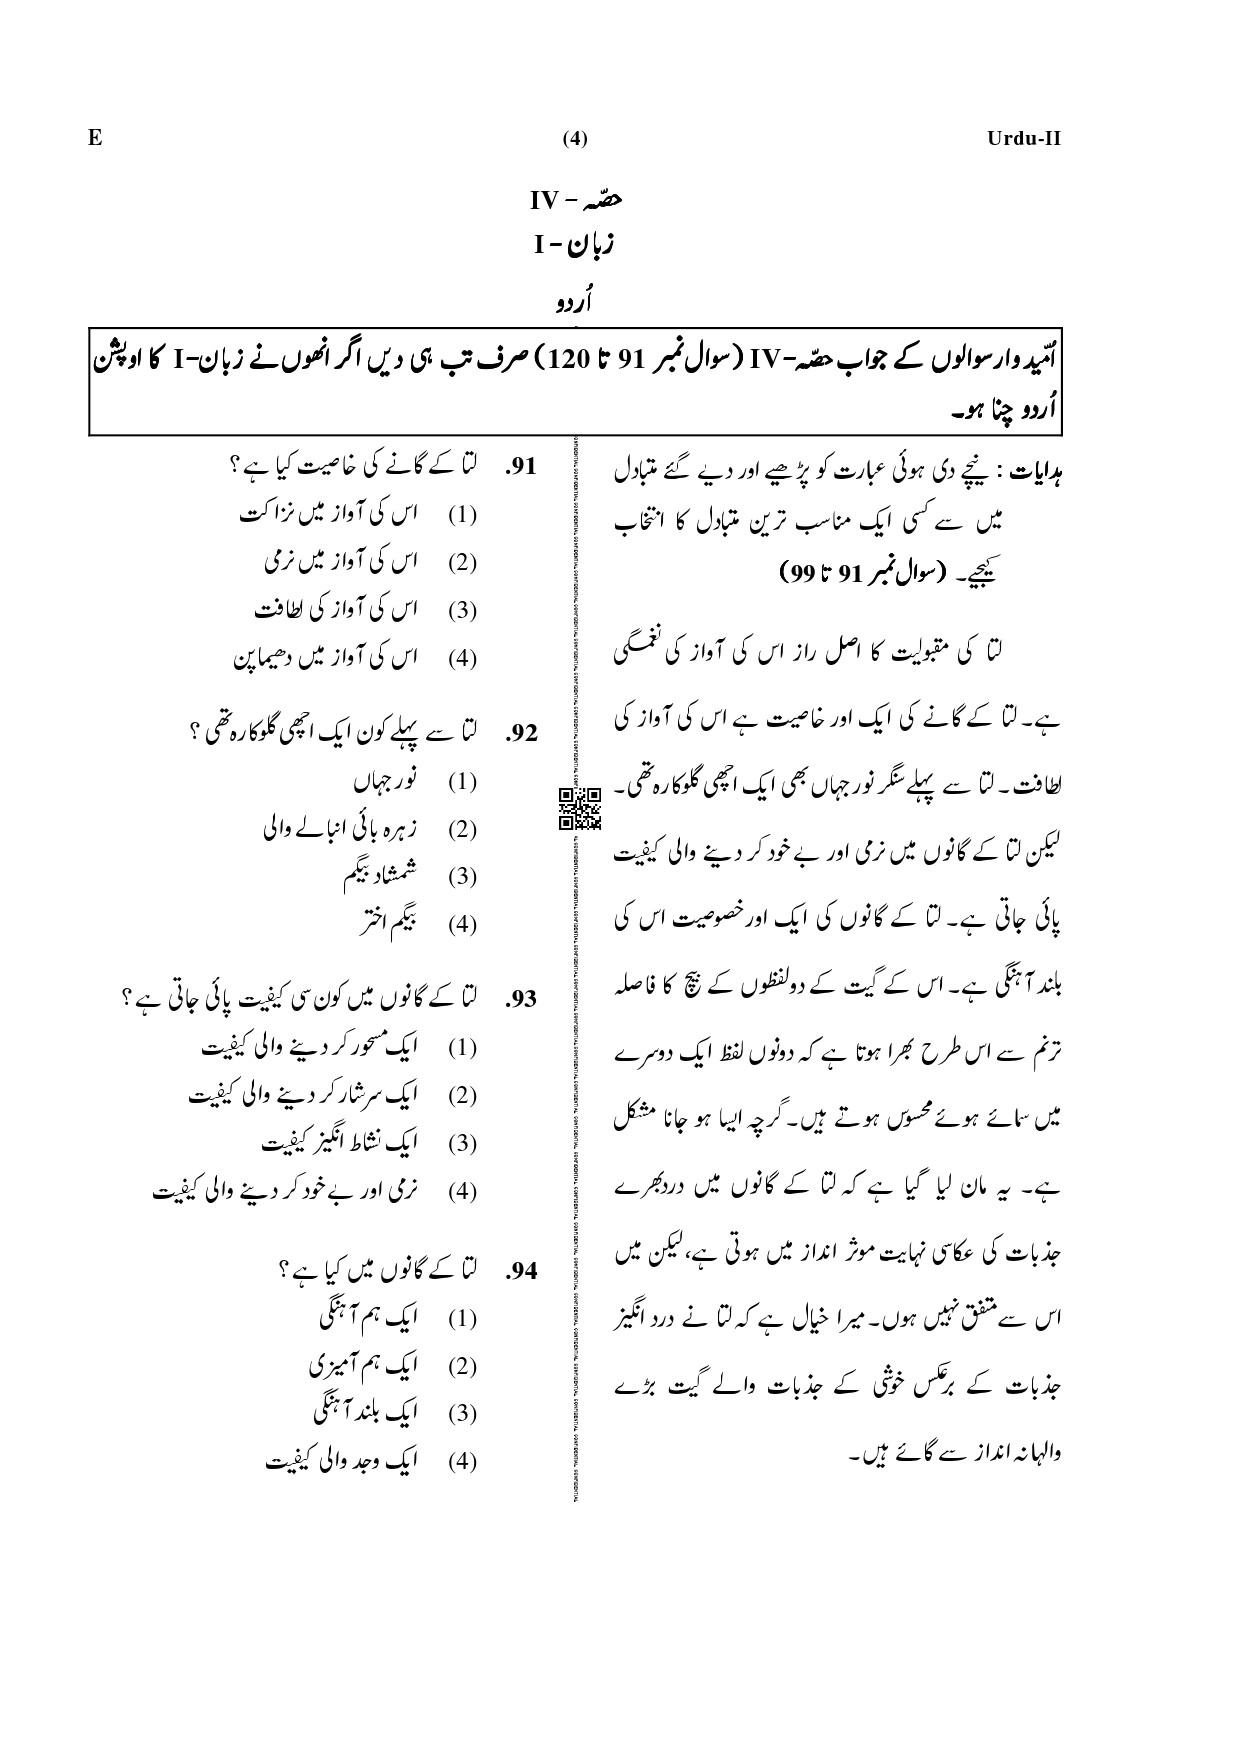 CTET December 2019 Paper 2 Part IV Language 1 Urdu 1